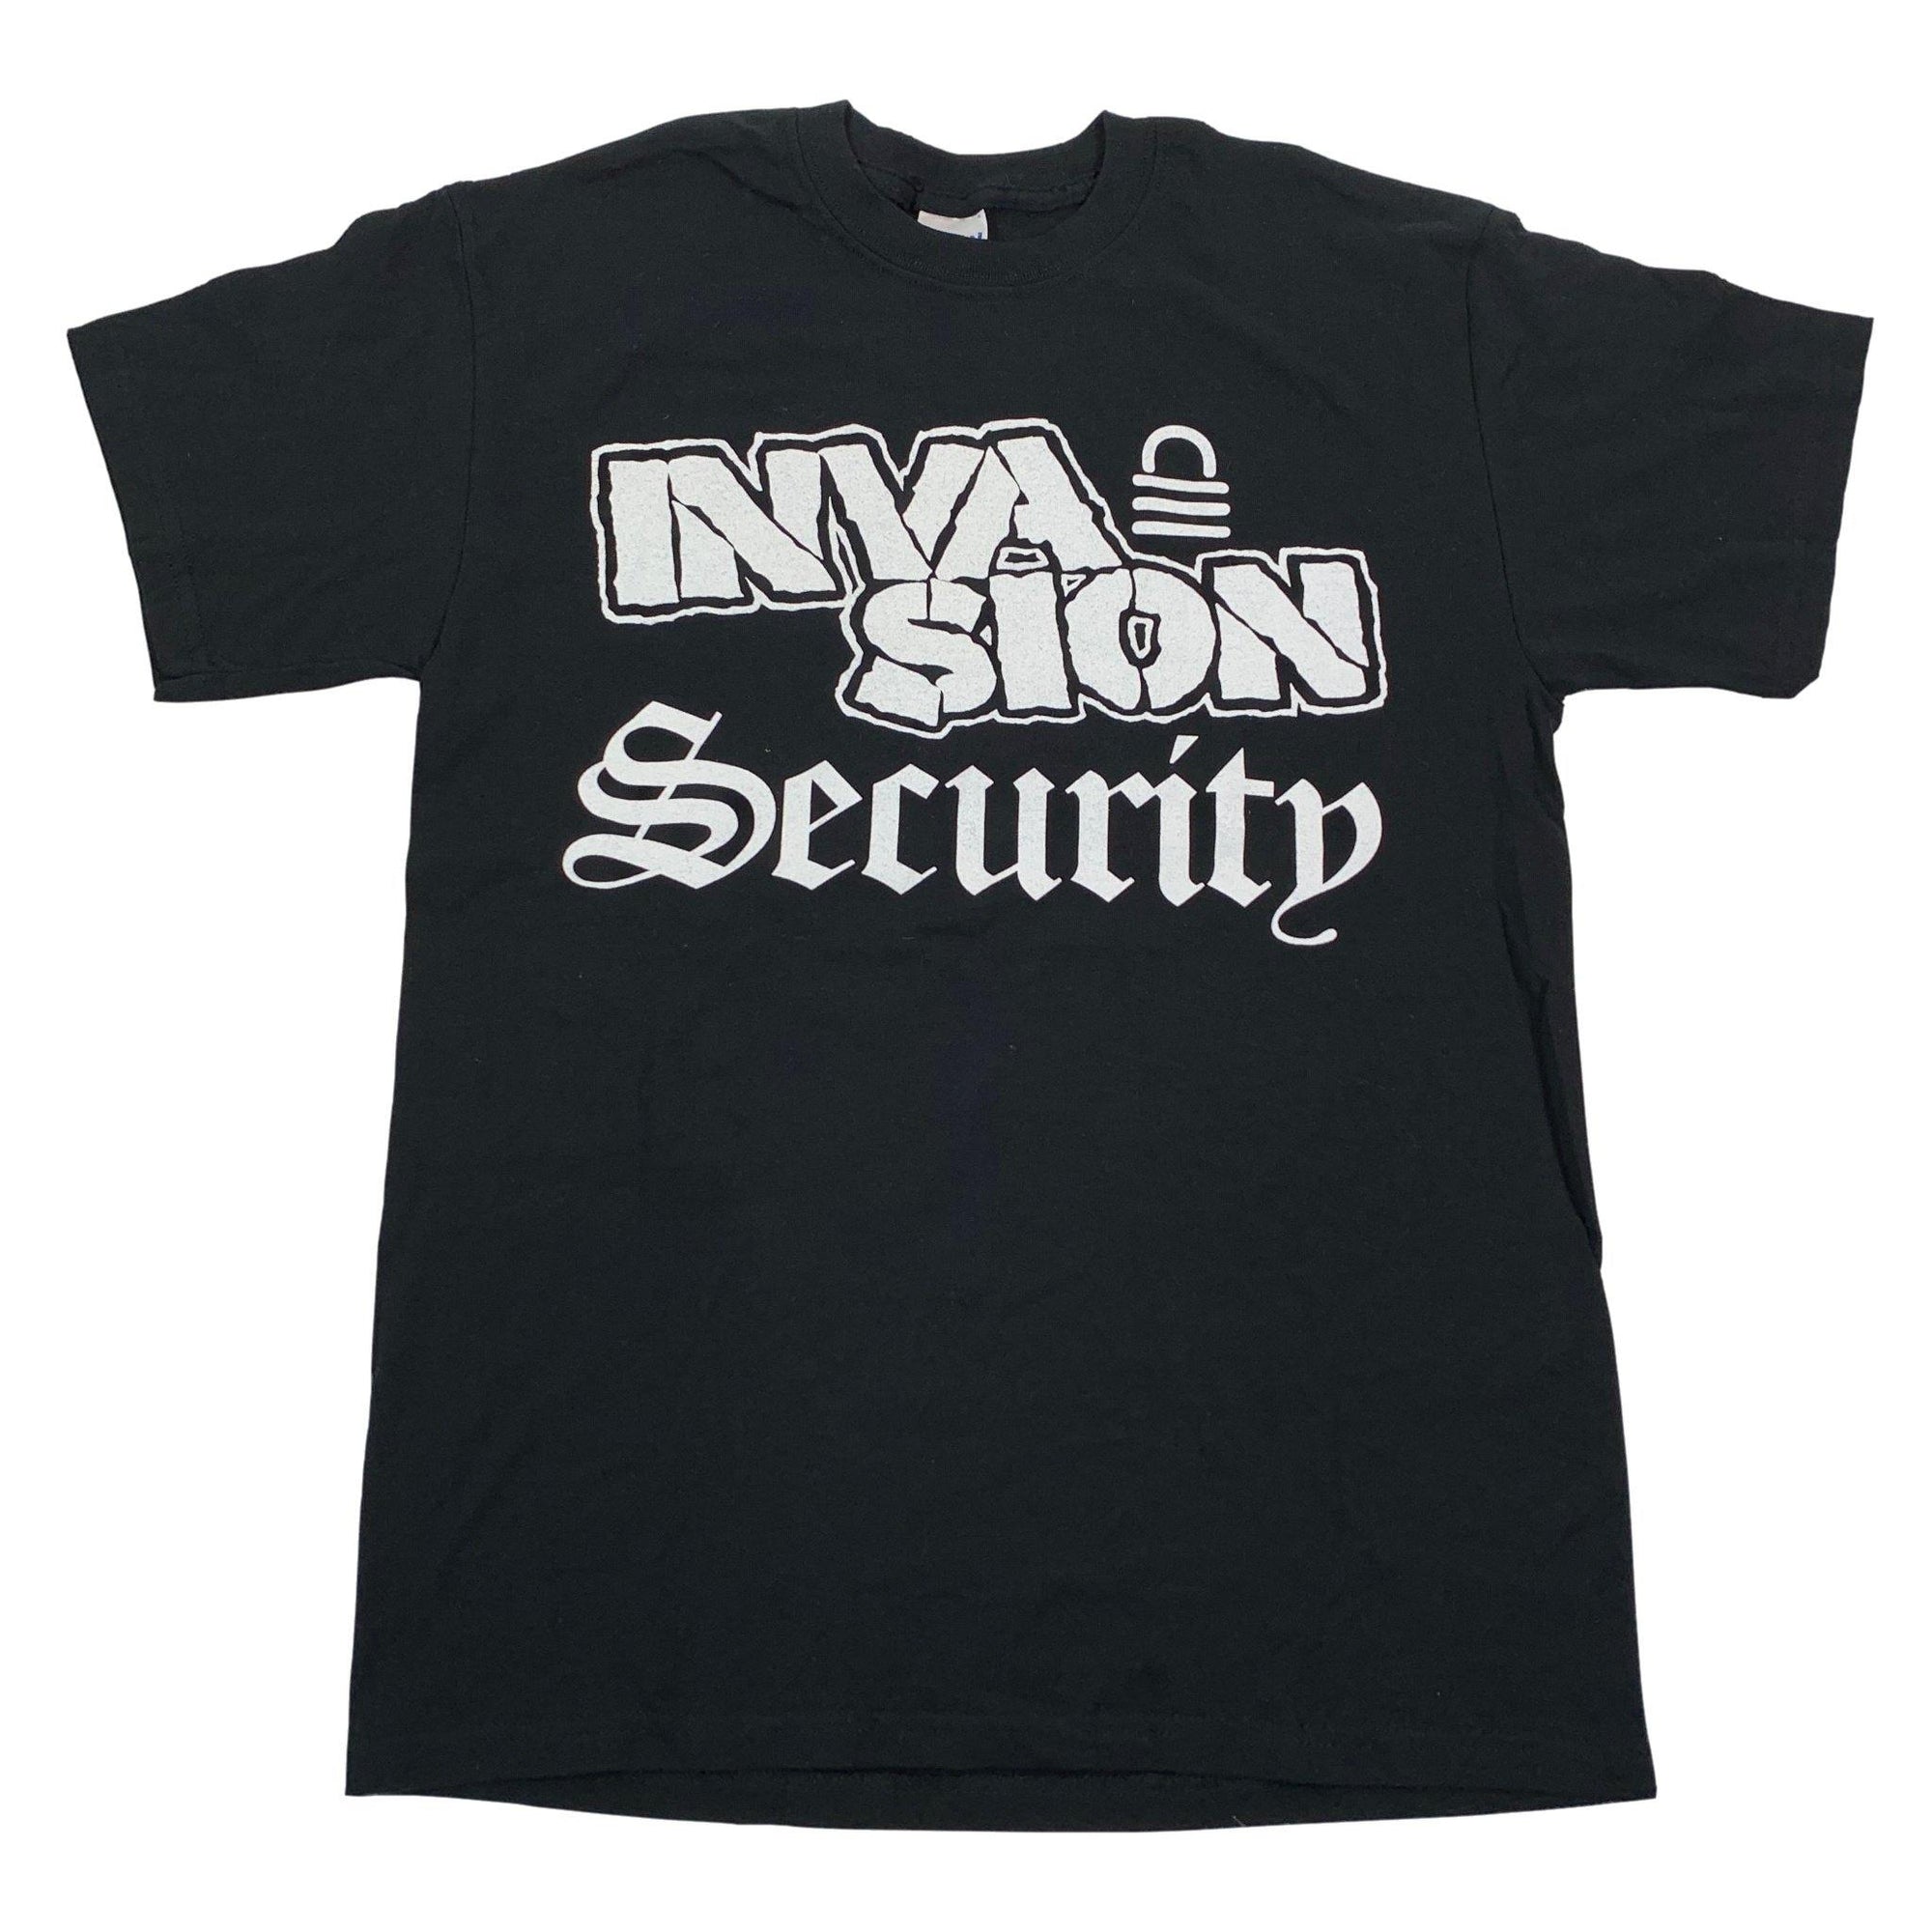 Vintage Invasion "Security" T-Shirt - jointcustodydc